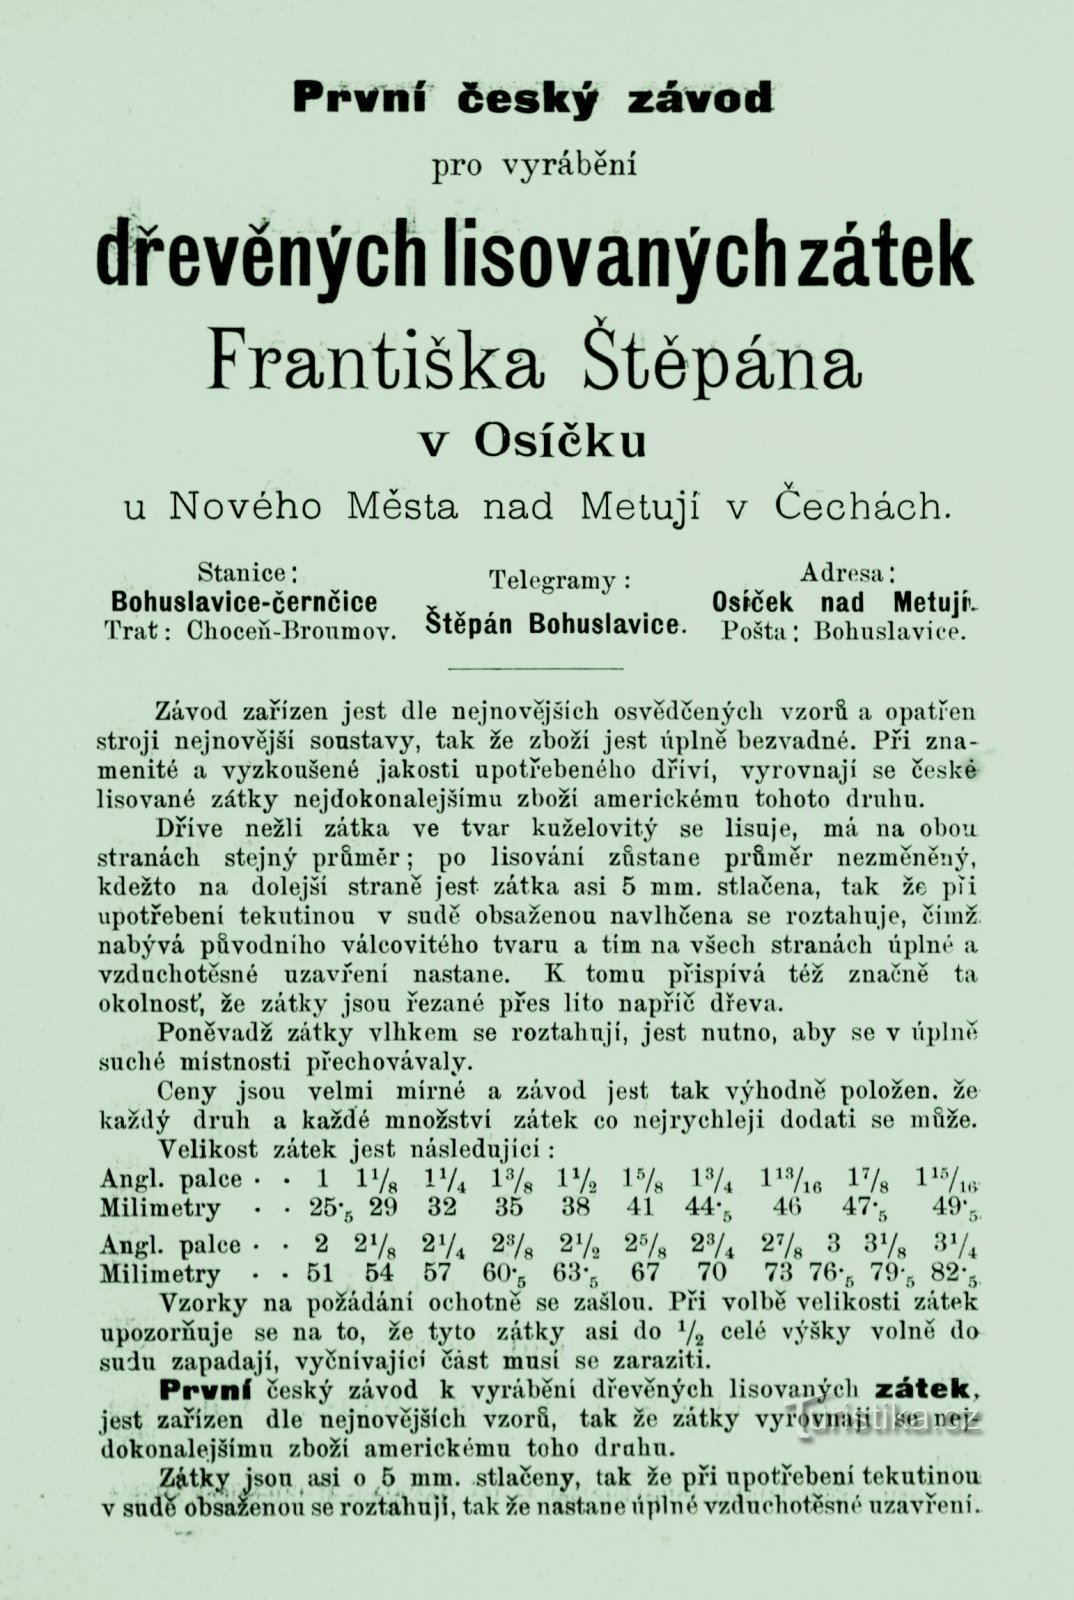 Publicité d'époque du meunier František Štěpán de 1893